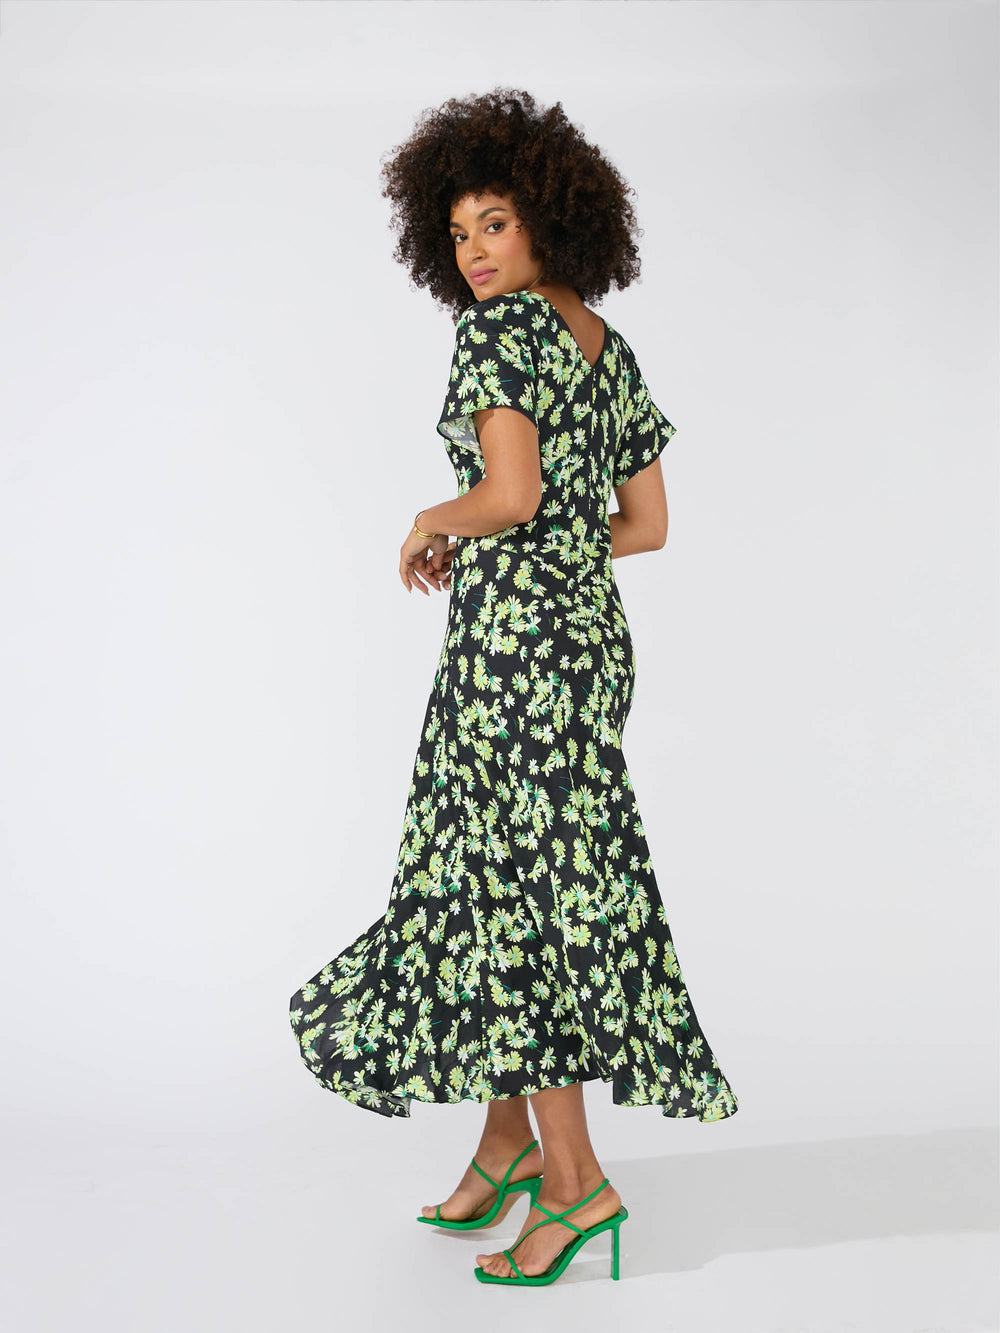 Indigo Flowers Olive Green Plus Size Rockabilly Midi Dress - Jadis